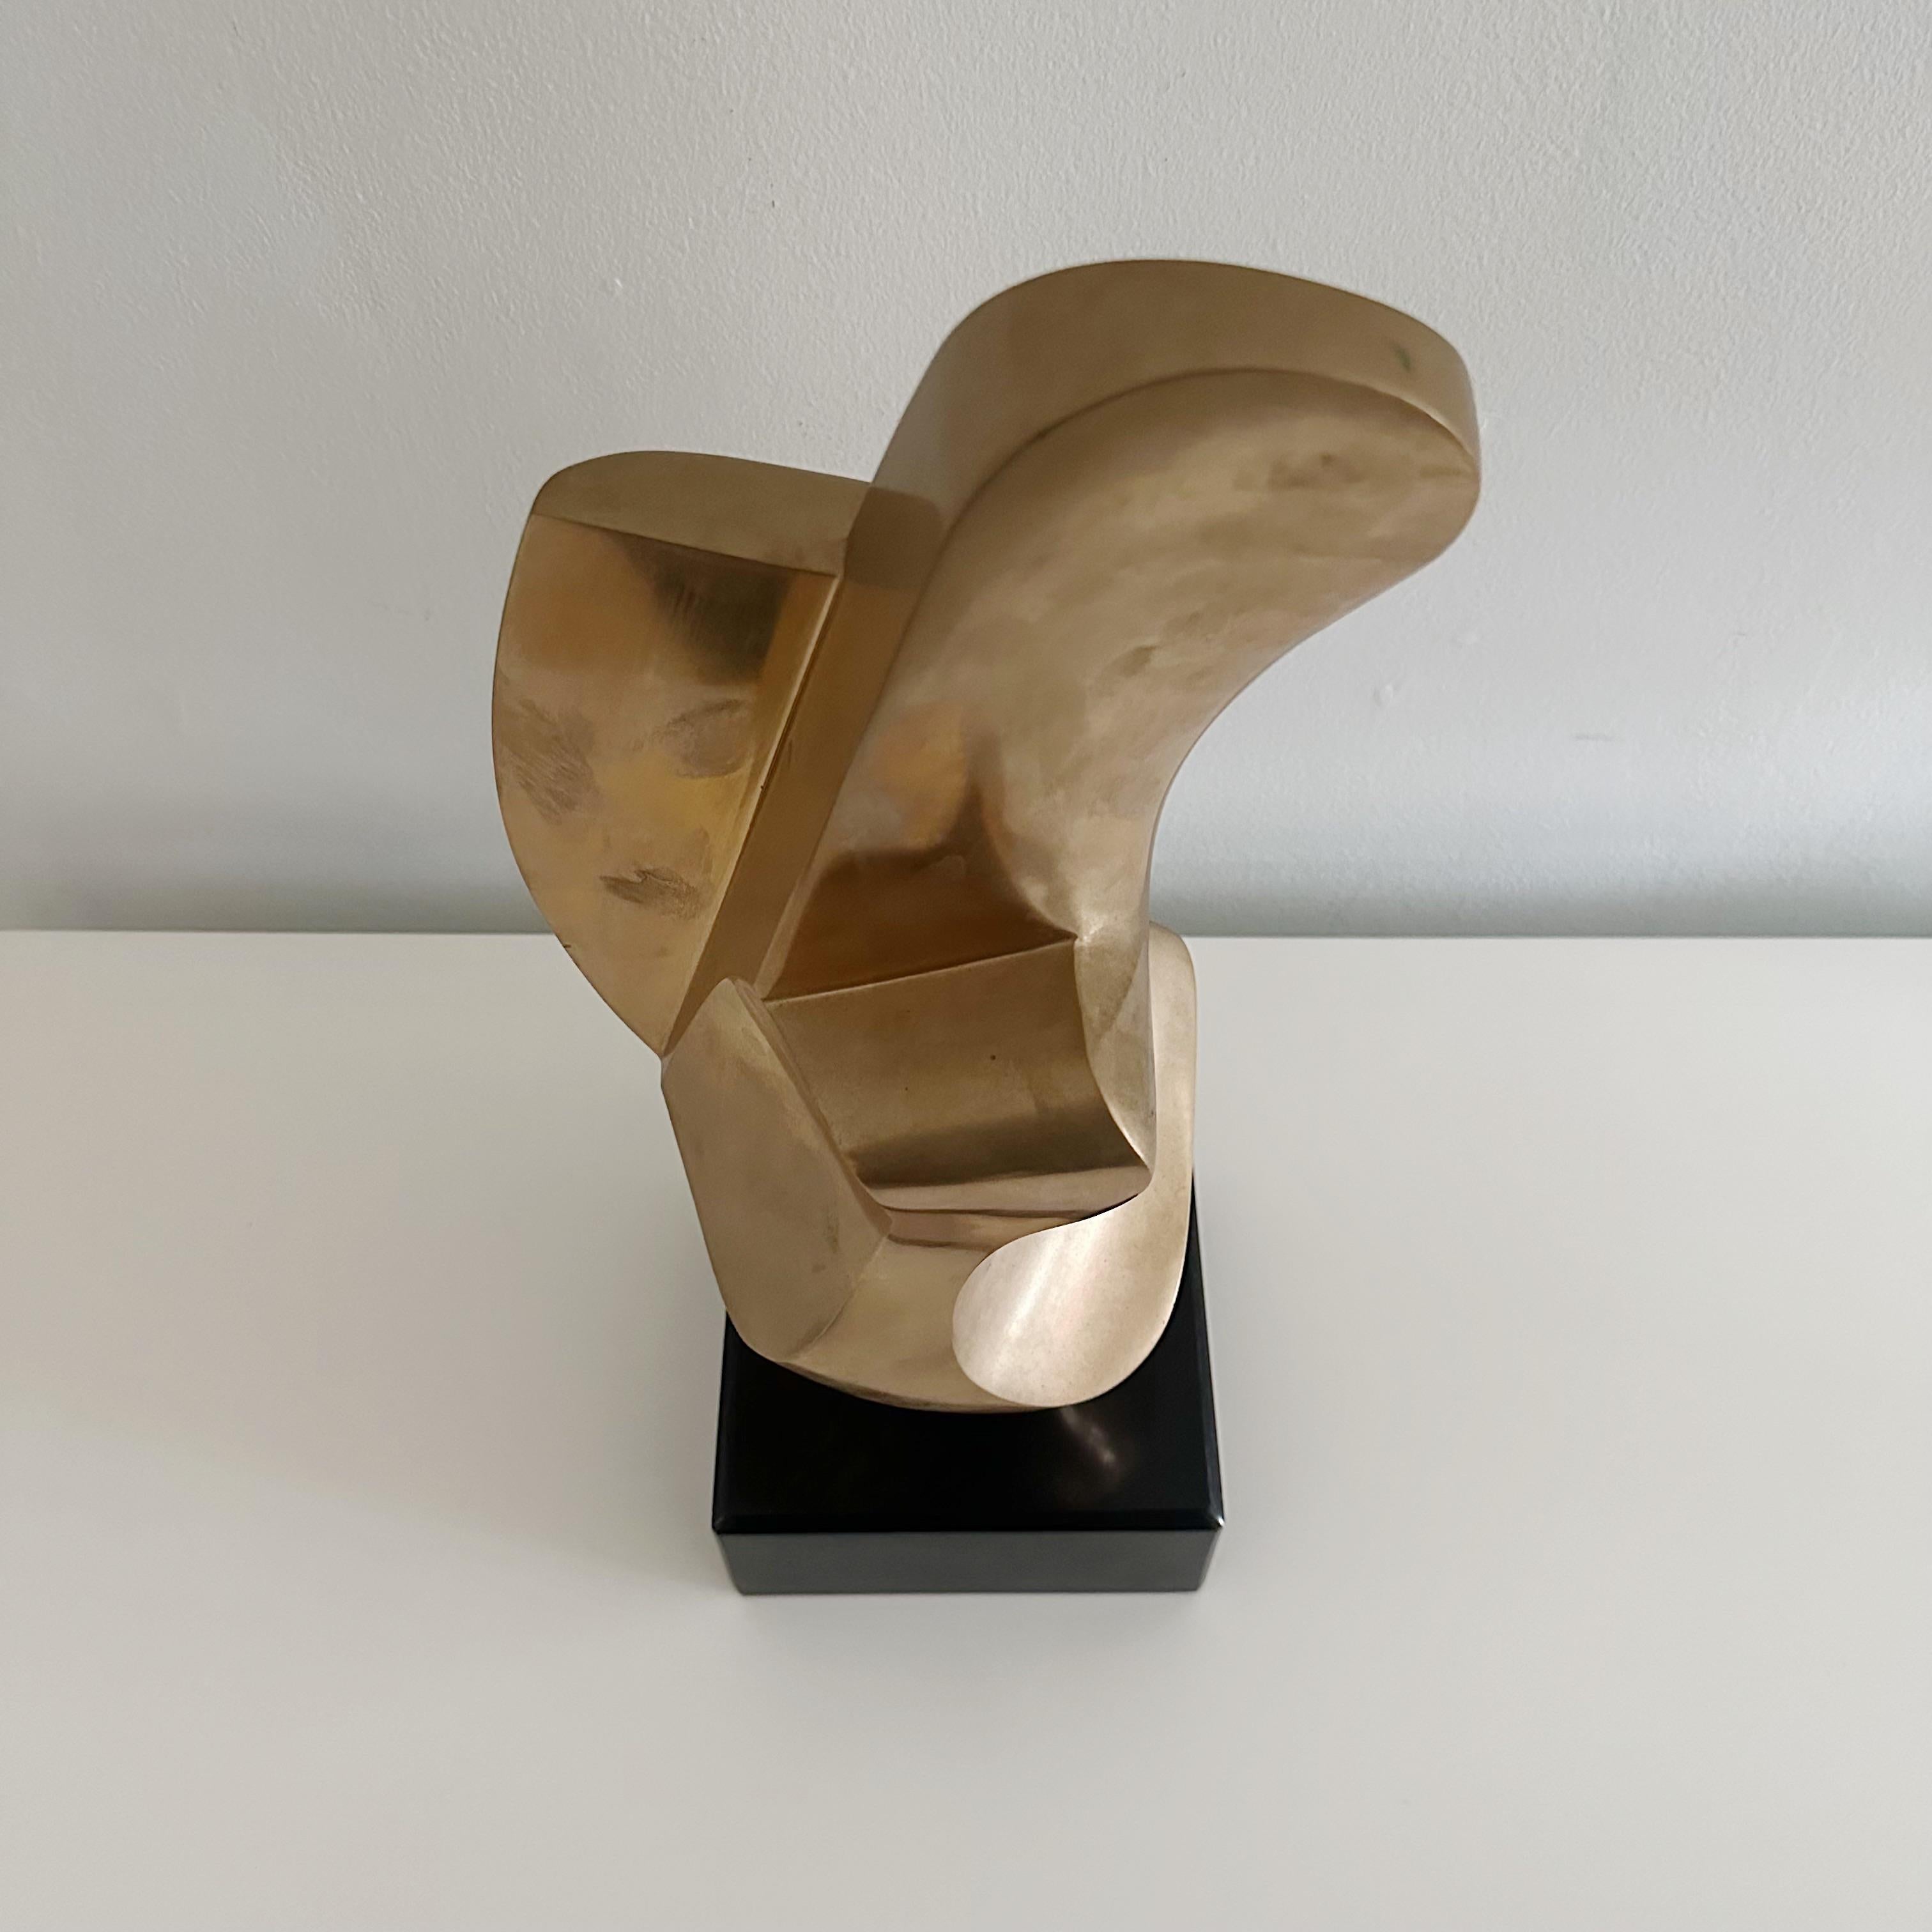 Fait main  Antonio Grediaga Kieff (né en 1936) Sculpture abstraite en bronze massif Circa 1974